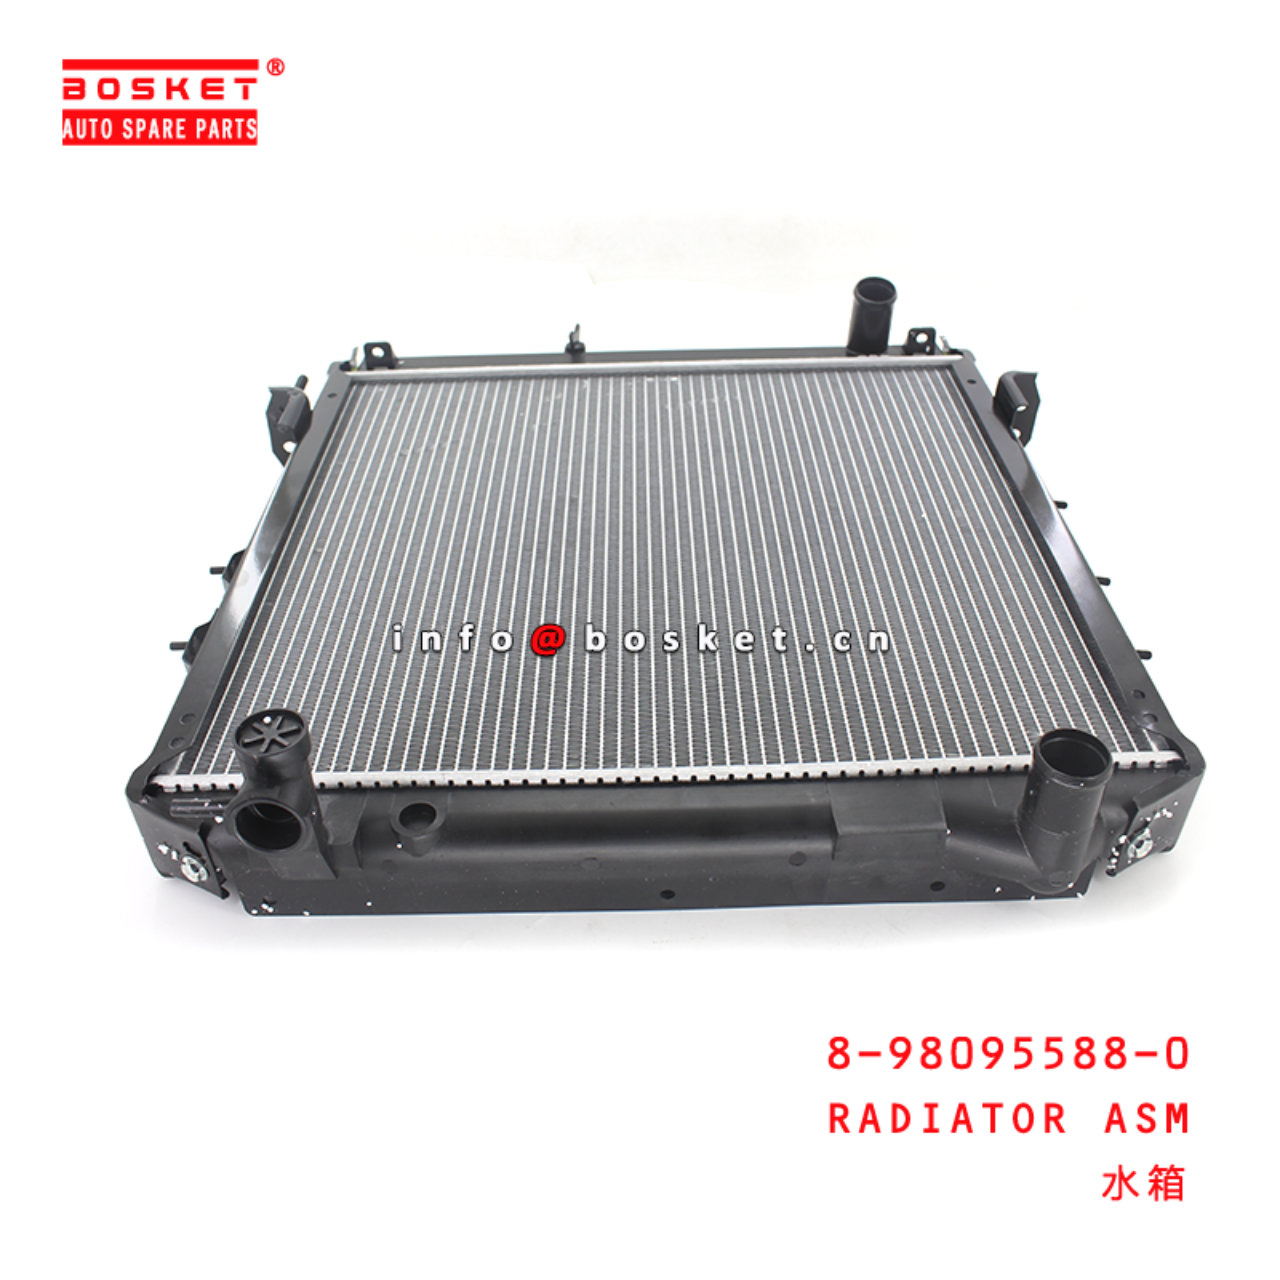 8-98095588-0 Radiator Assembly Suitable for ISUZU NPR 4HG1 8980955880